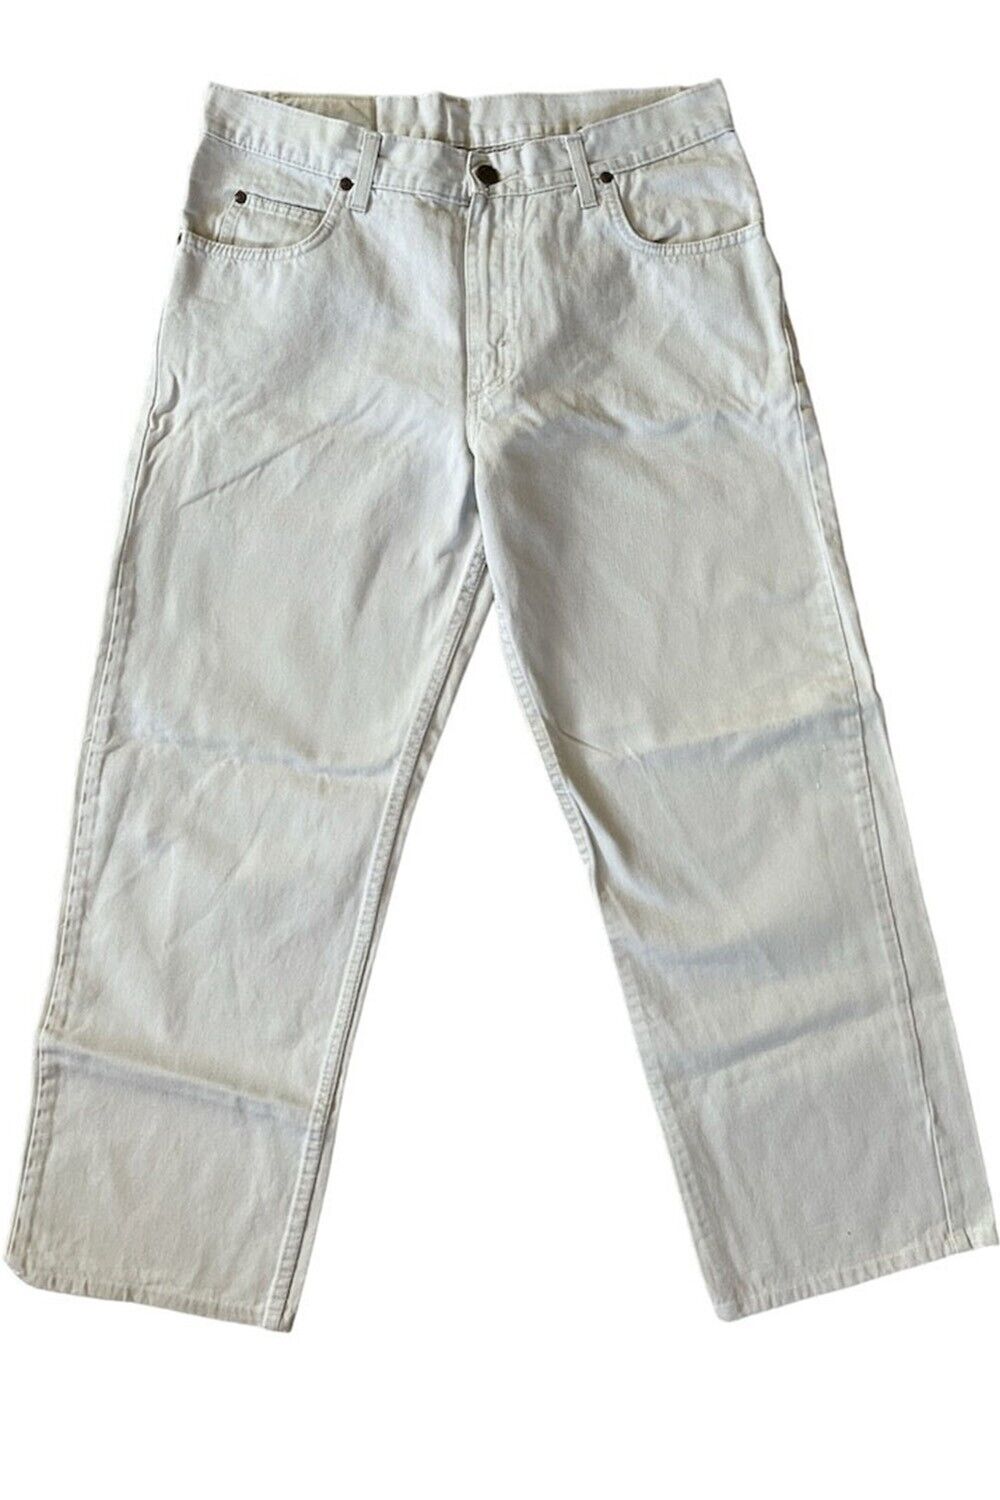 Vintage Lee Light Wash Jeans 🌻 THESE PANTS ARE …... - Depop